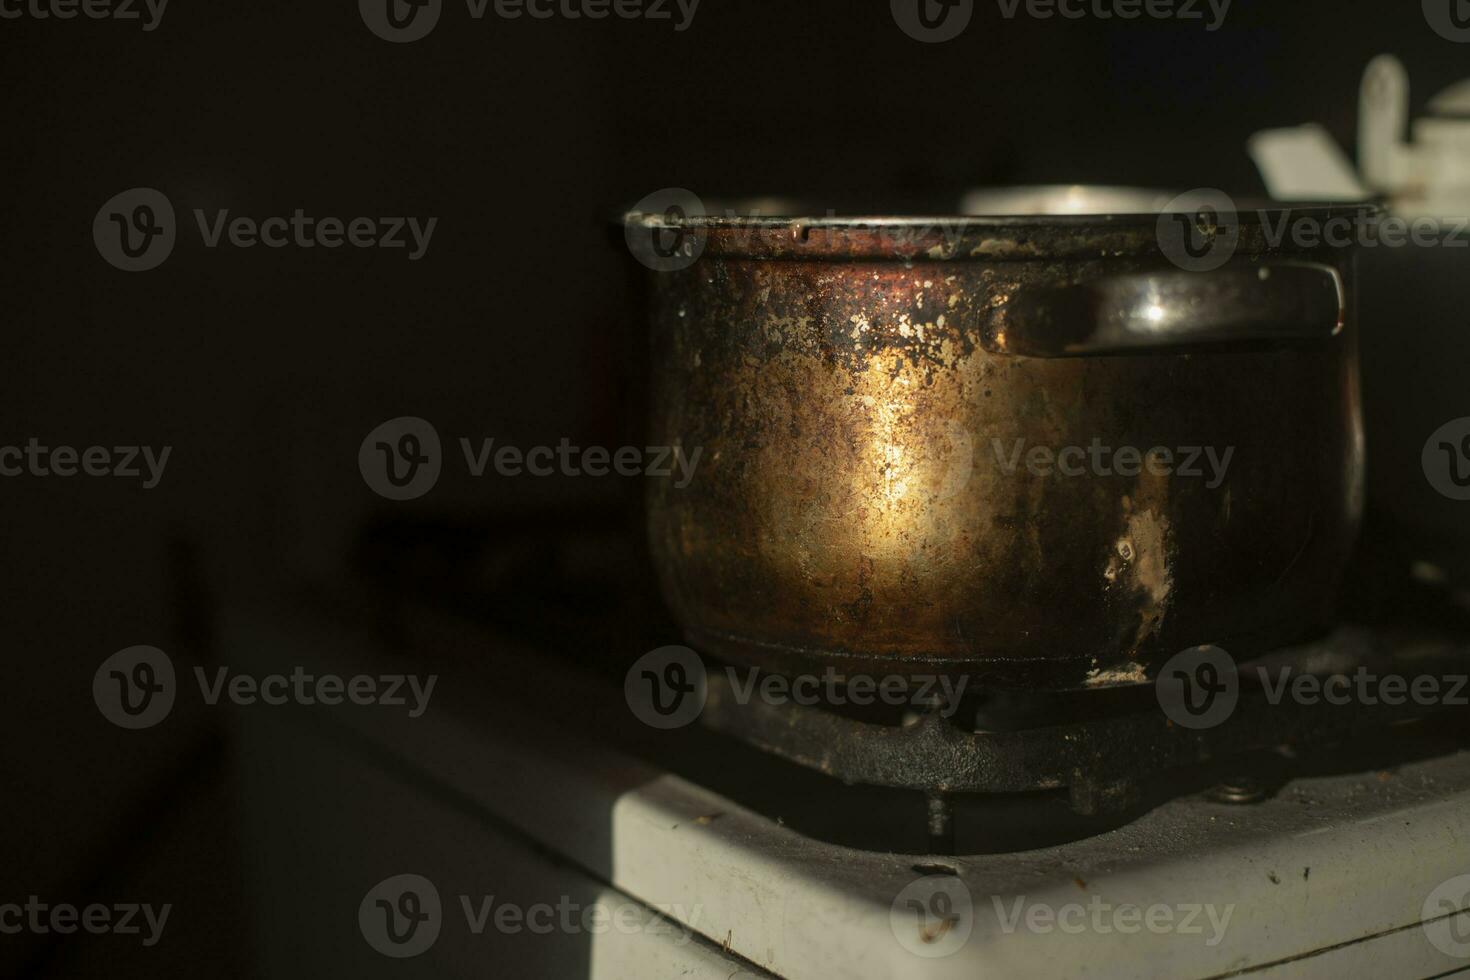 roestig pot in keuken. oud borden. keuken details. foto